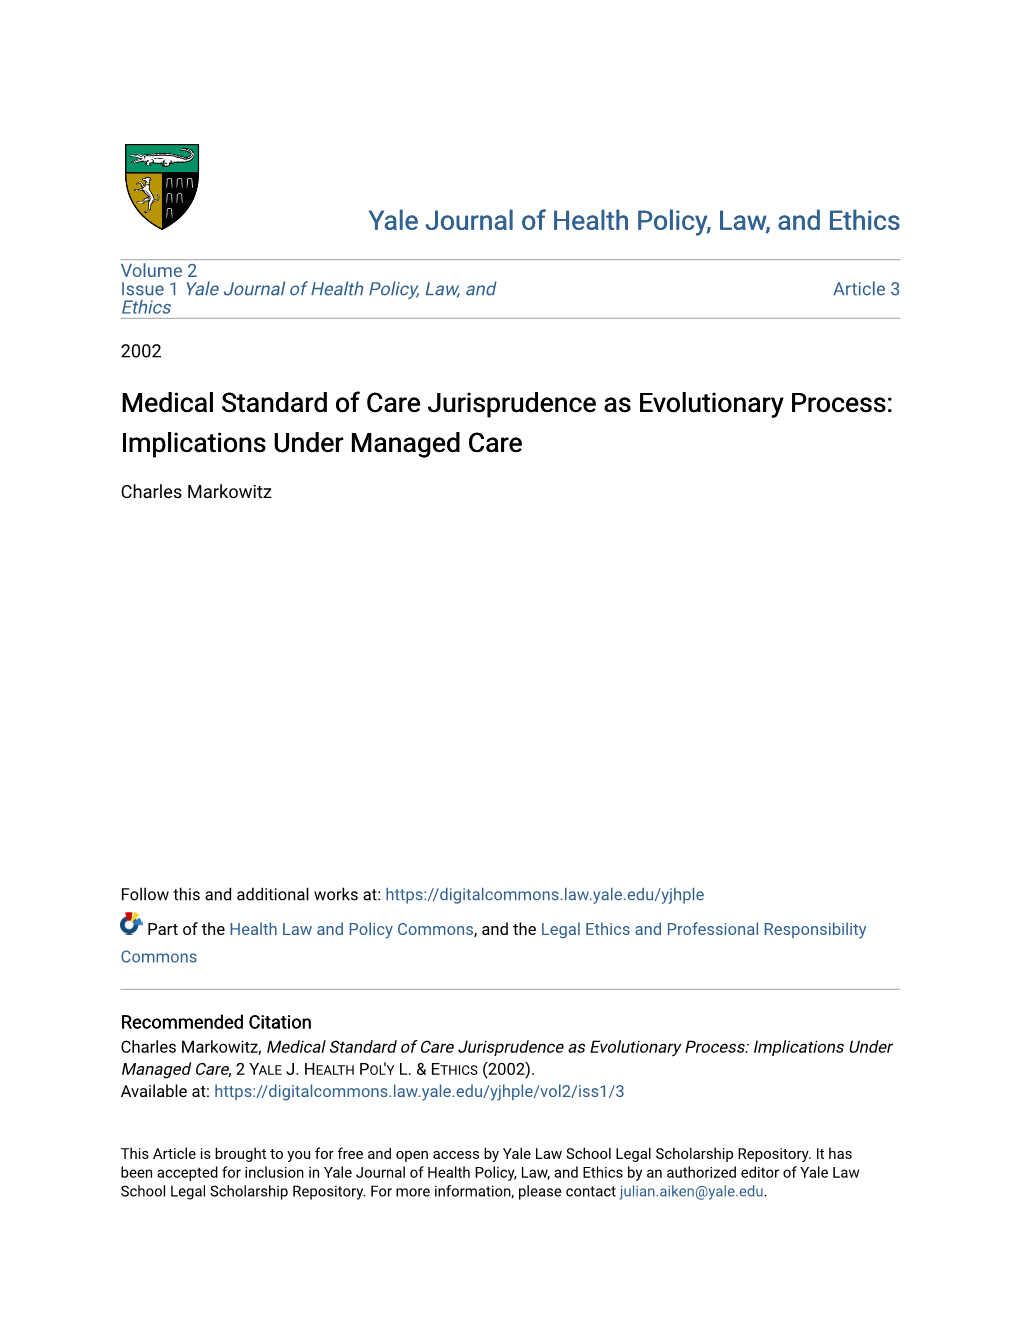 Medical Standard of Care Jurisprudence As Evolutionary Process: Implications Under Managed Care